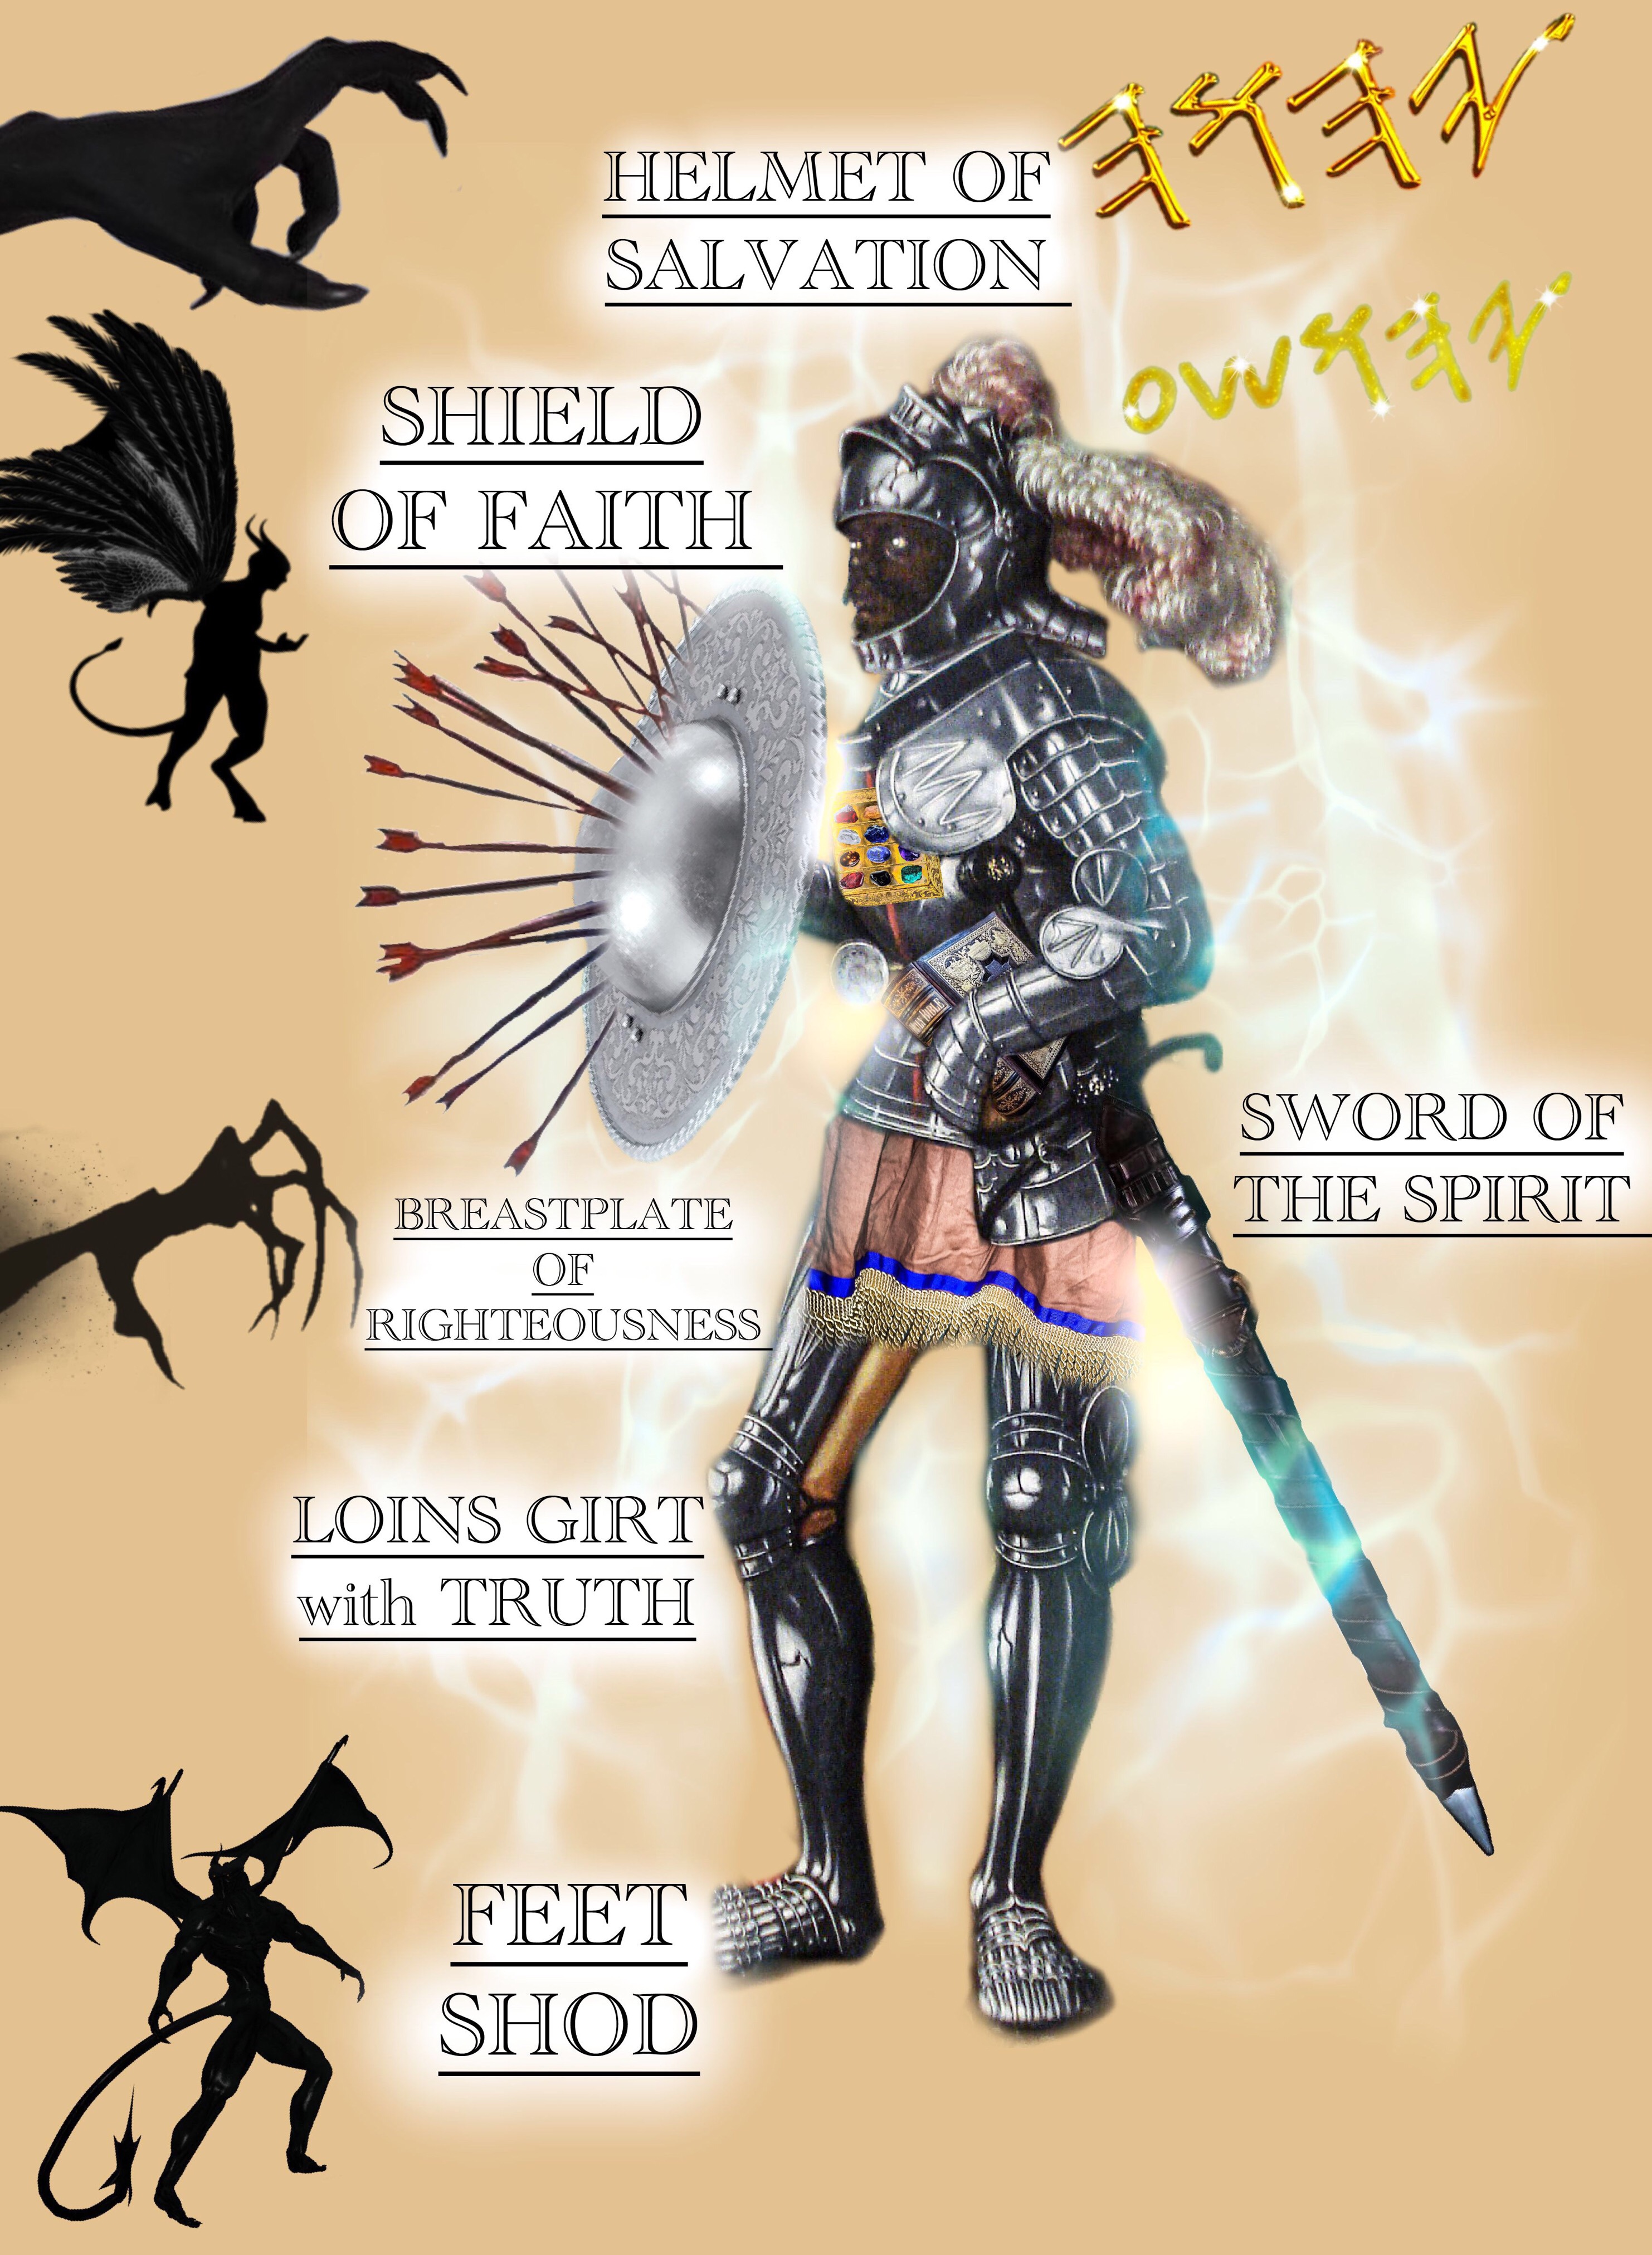 armor of gid